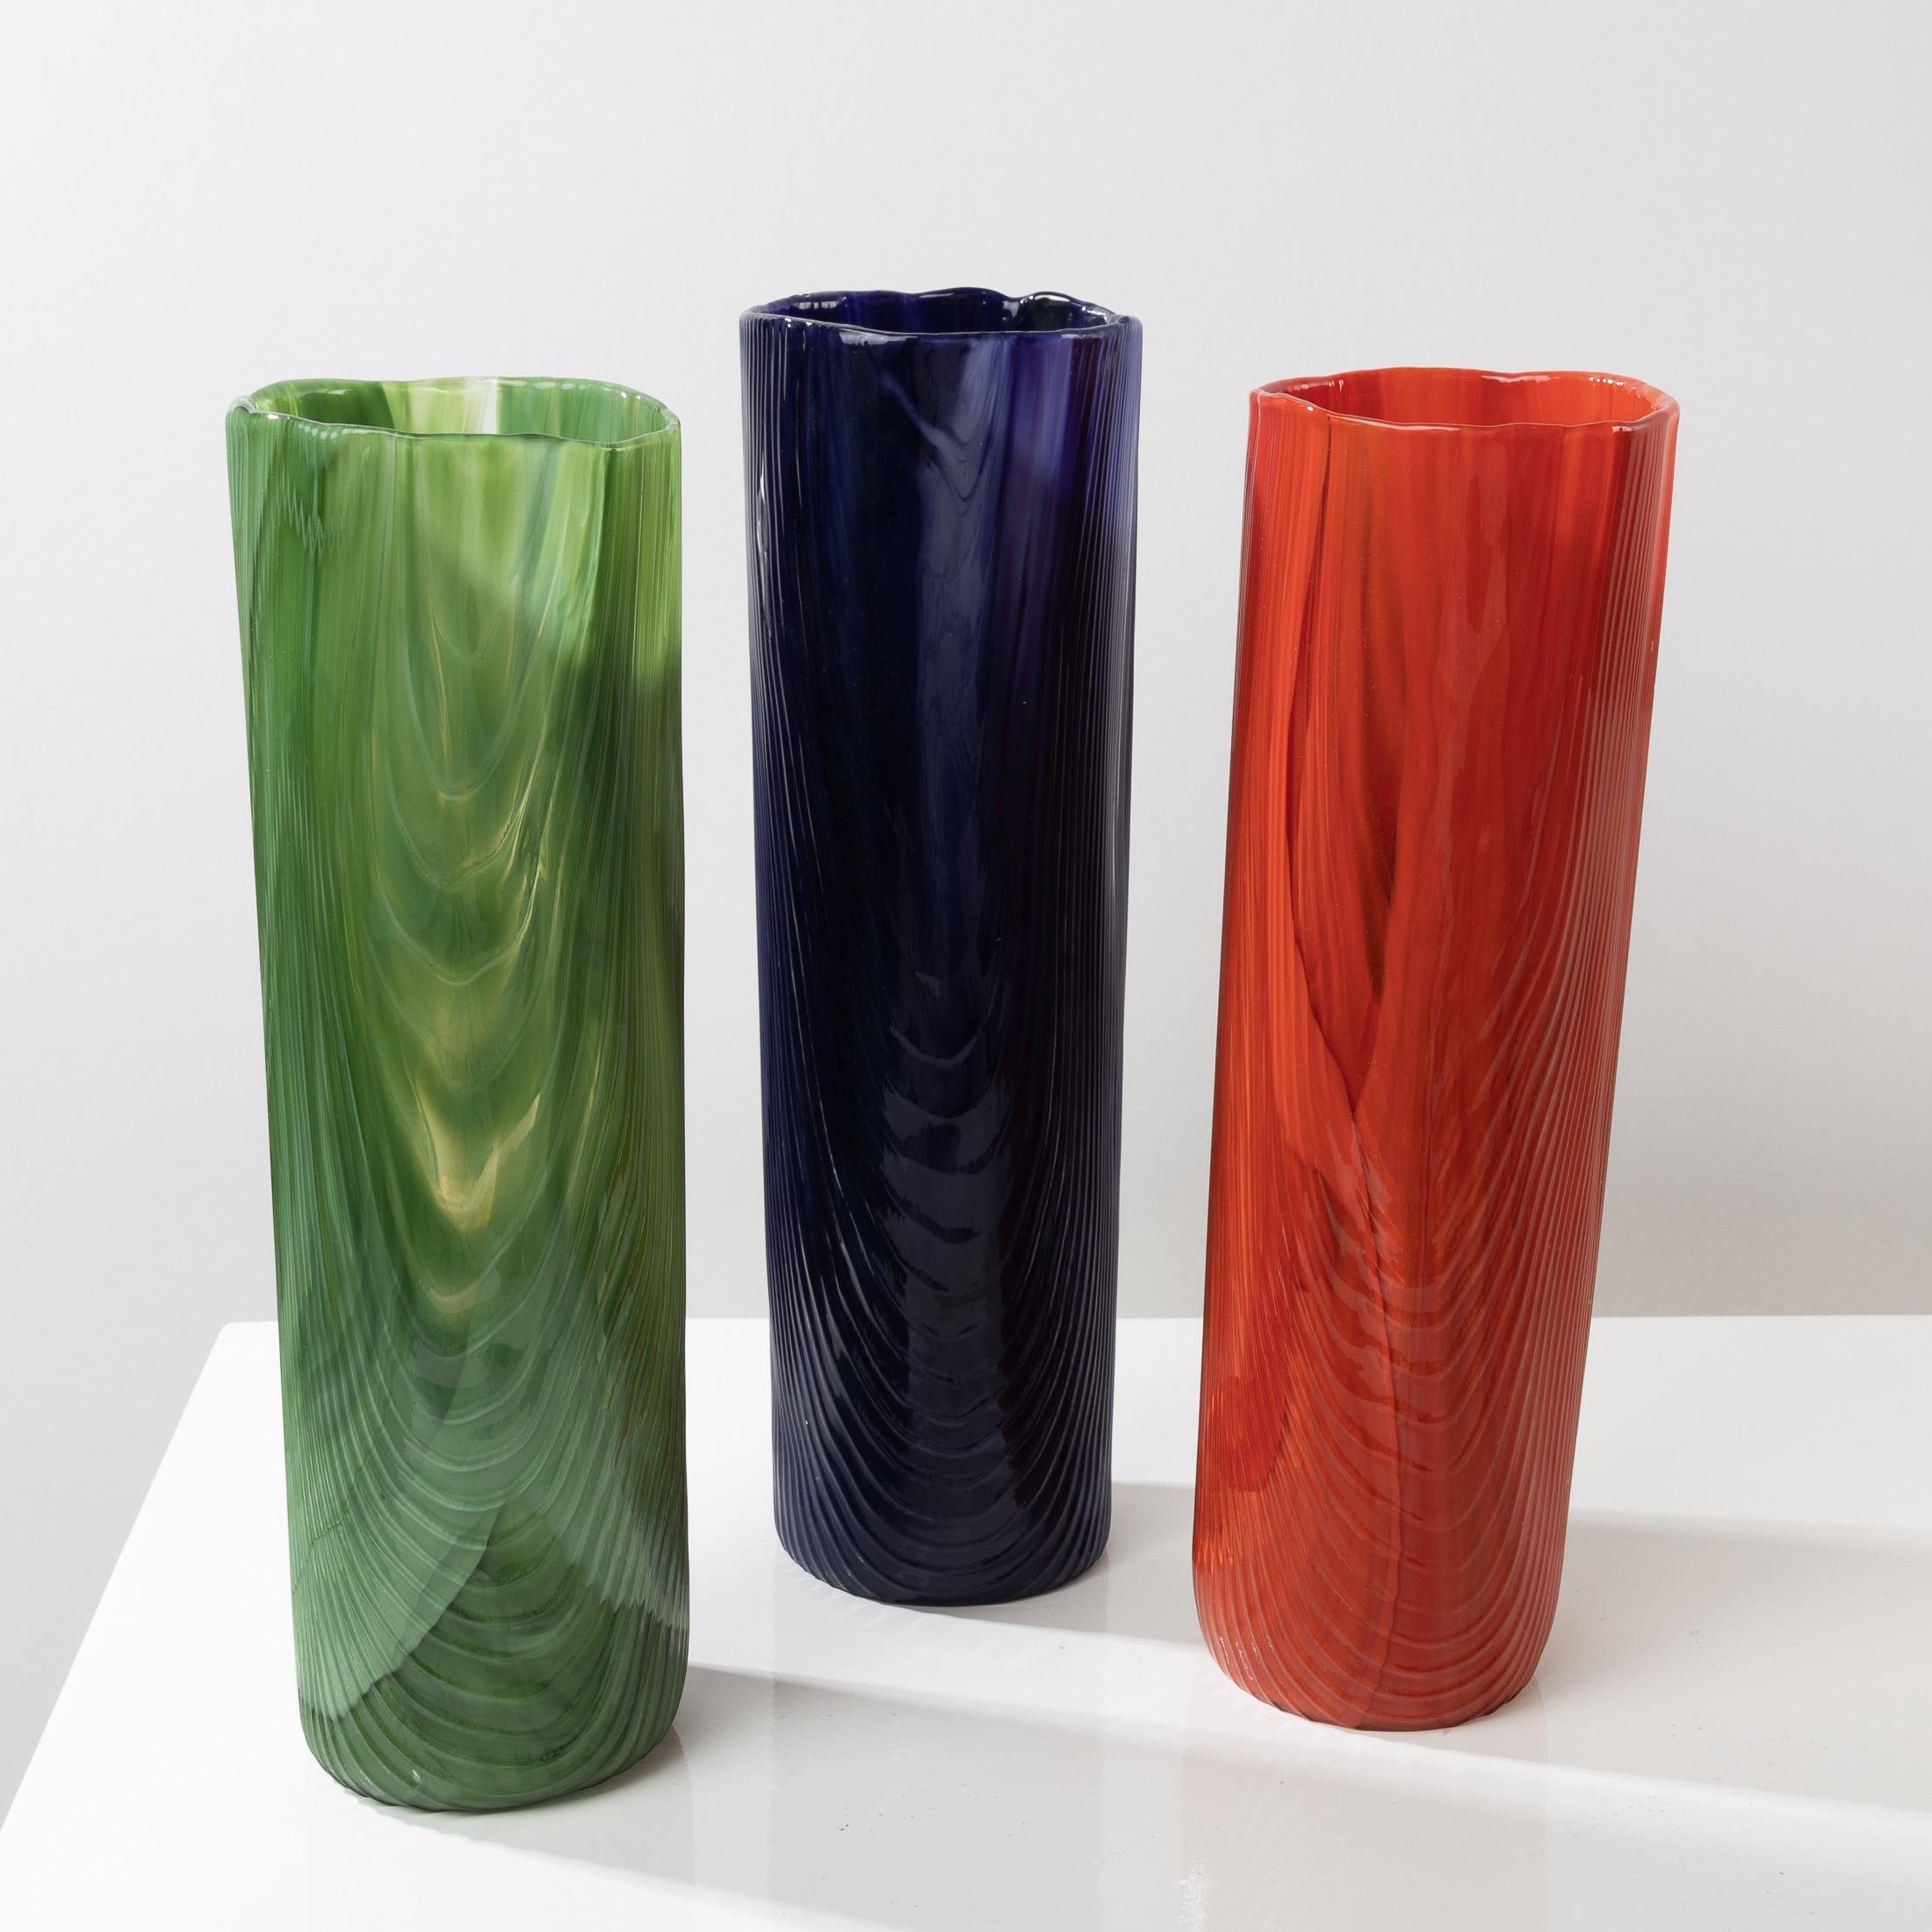 Italian Set of 3 Vases from the “Tronchi” Series by Toni Zuccheri, Venini, Italy